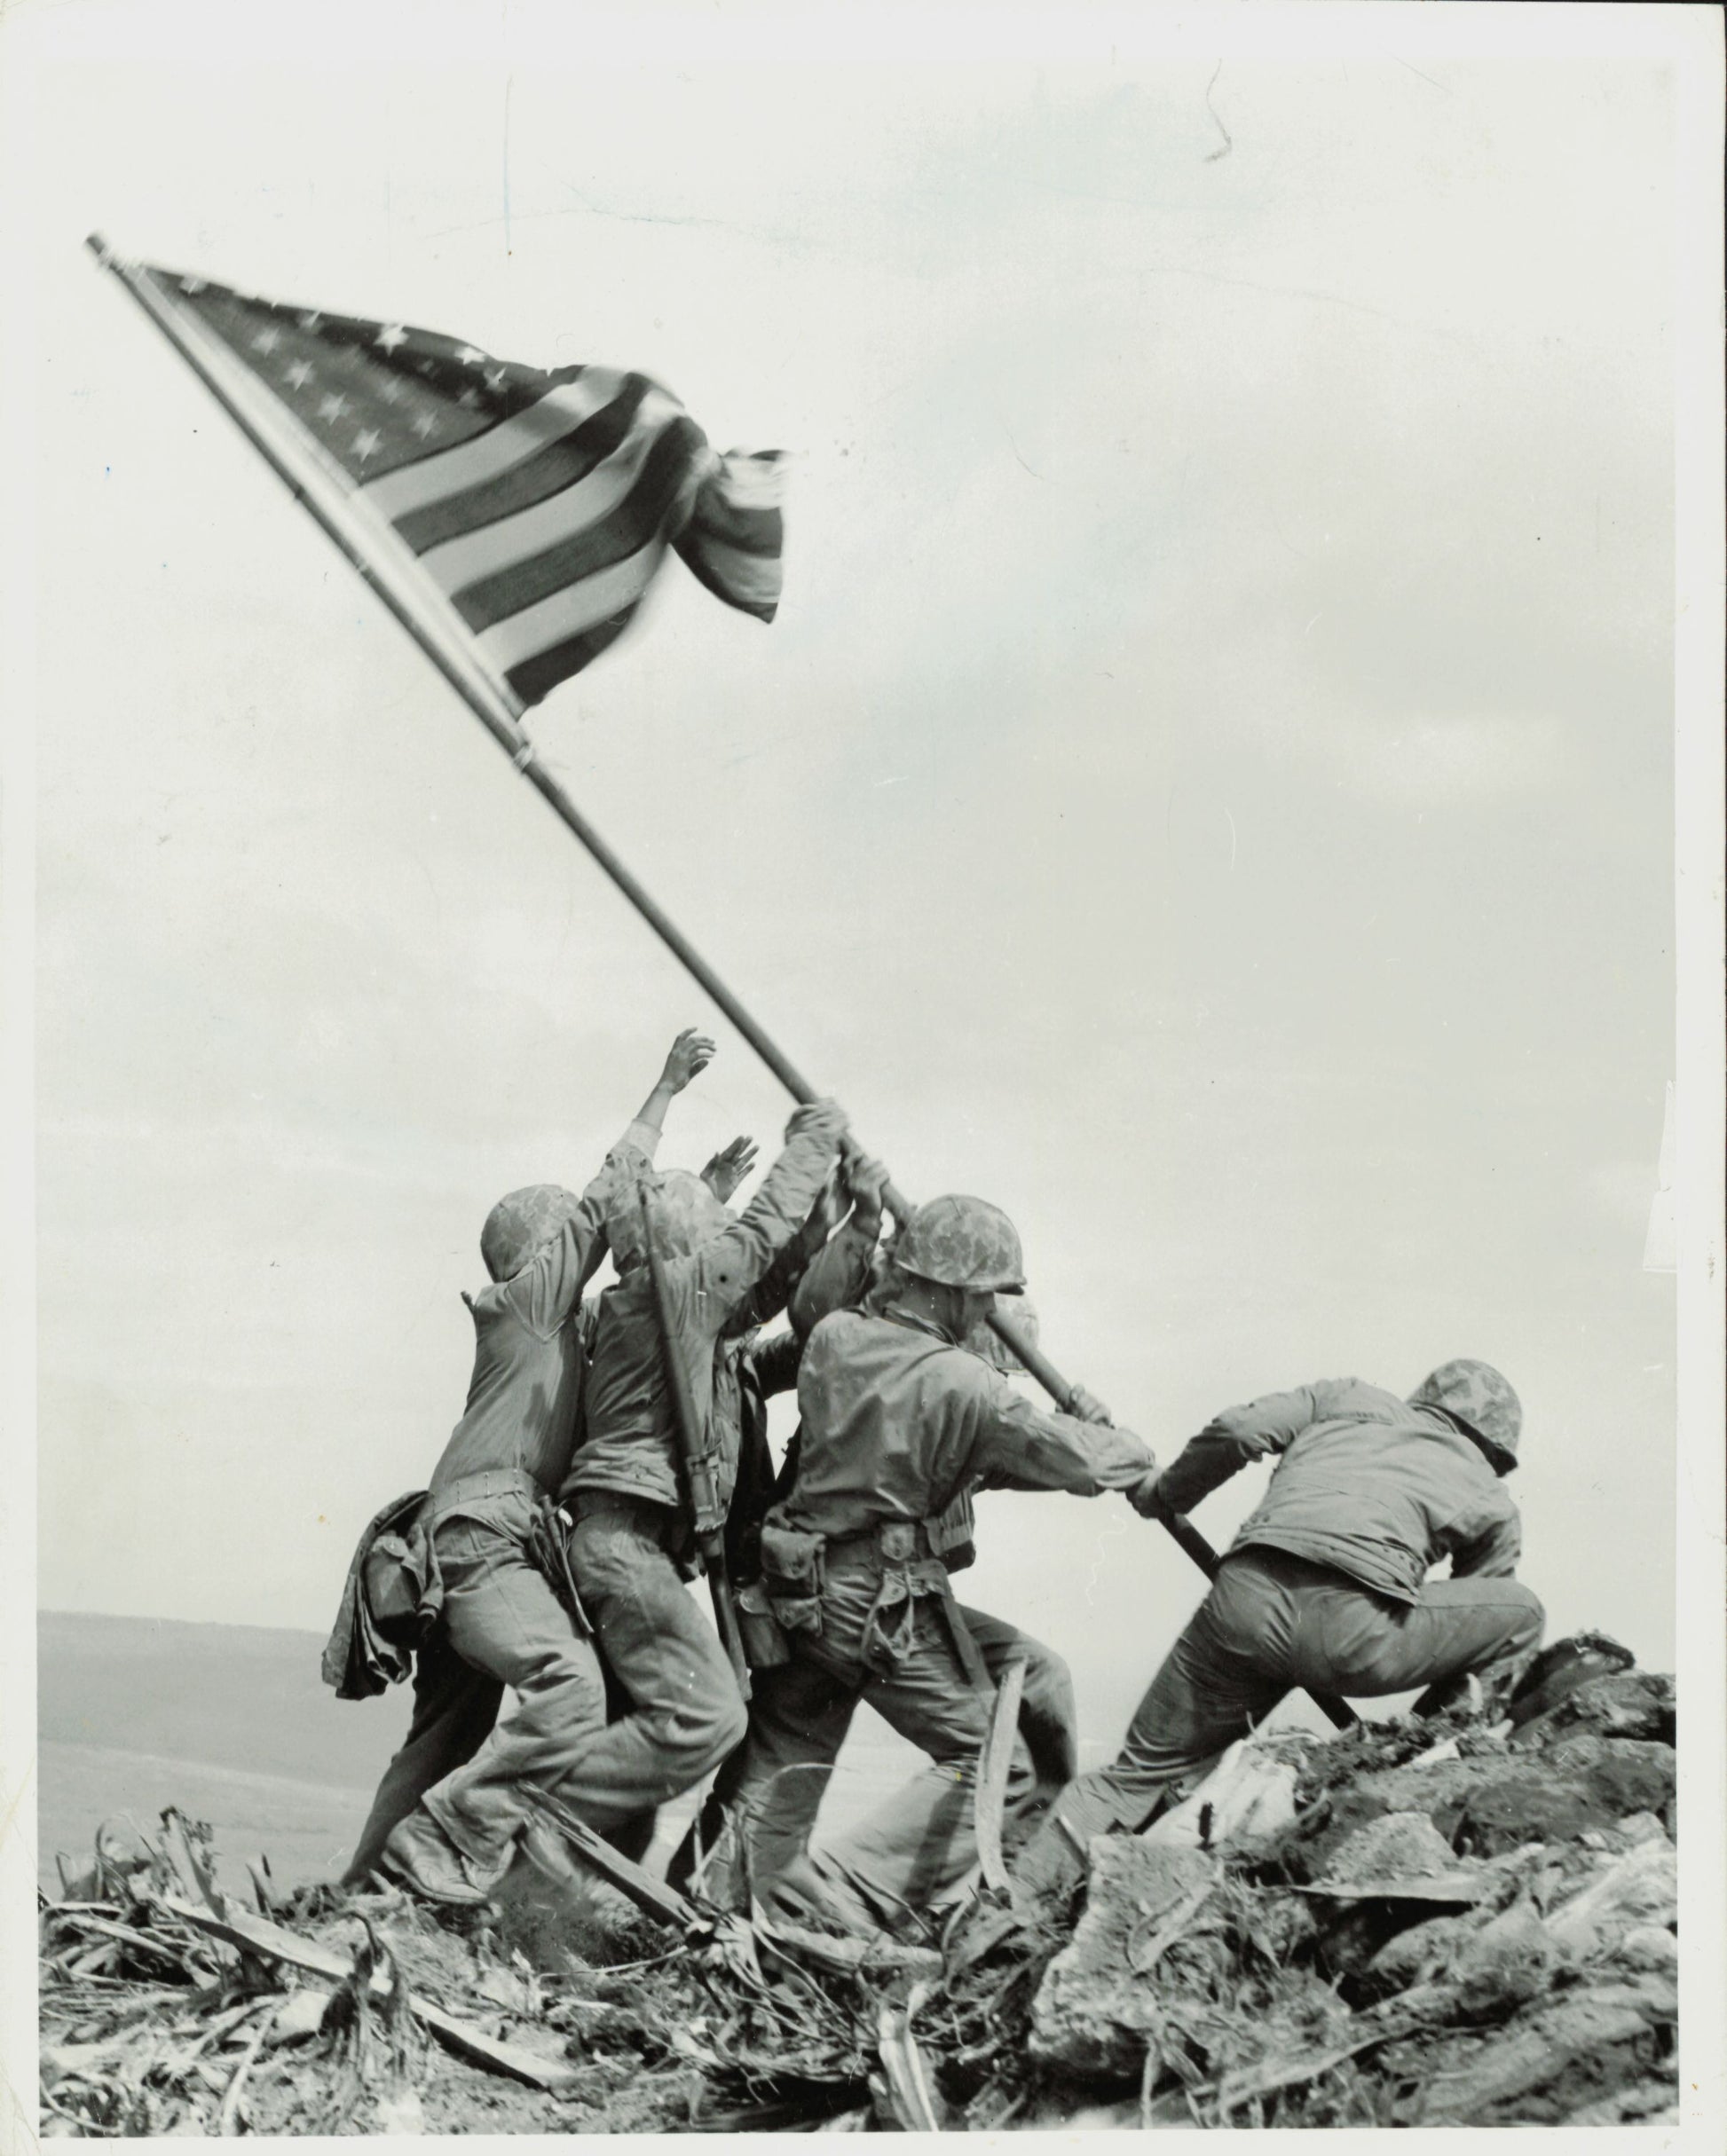 Raising the Flag on Iwo Jima + Background Image (2 vintage prints) Military WWII